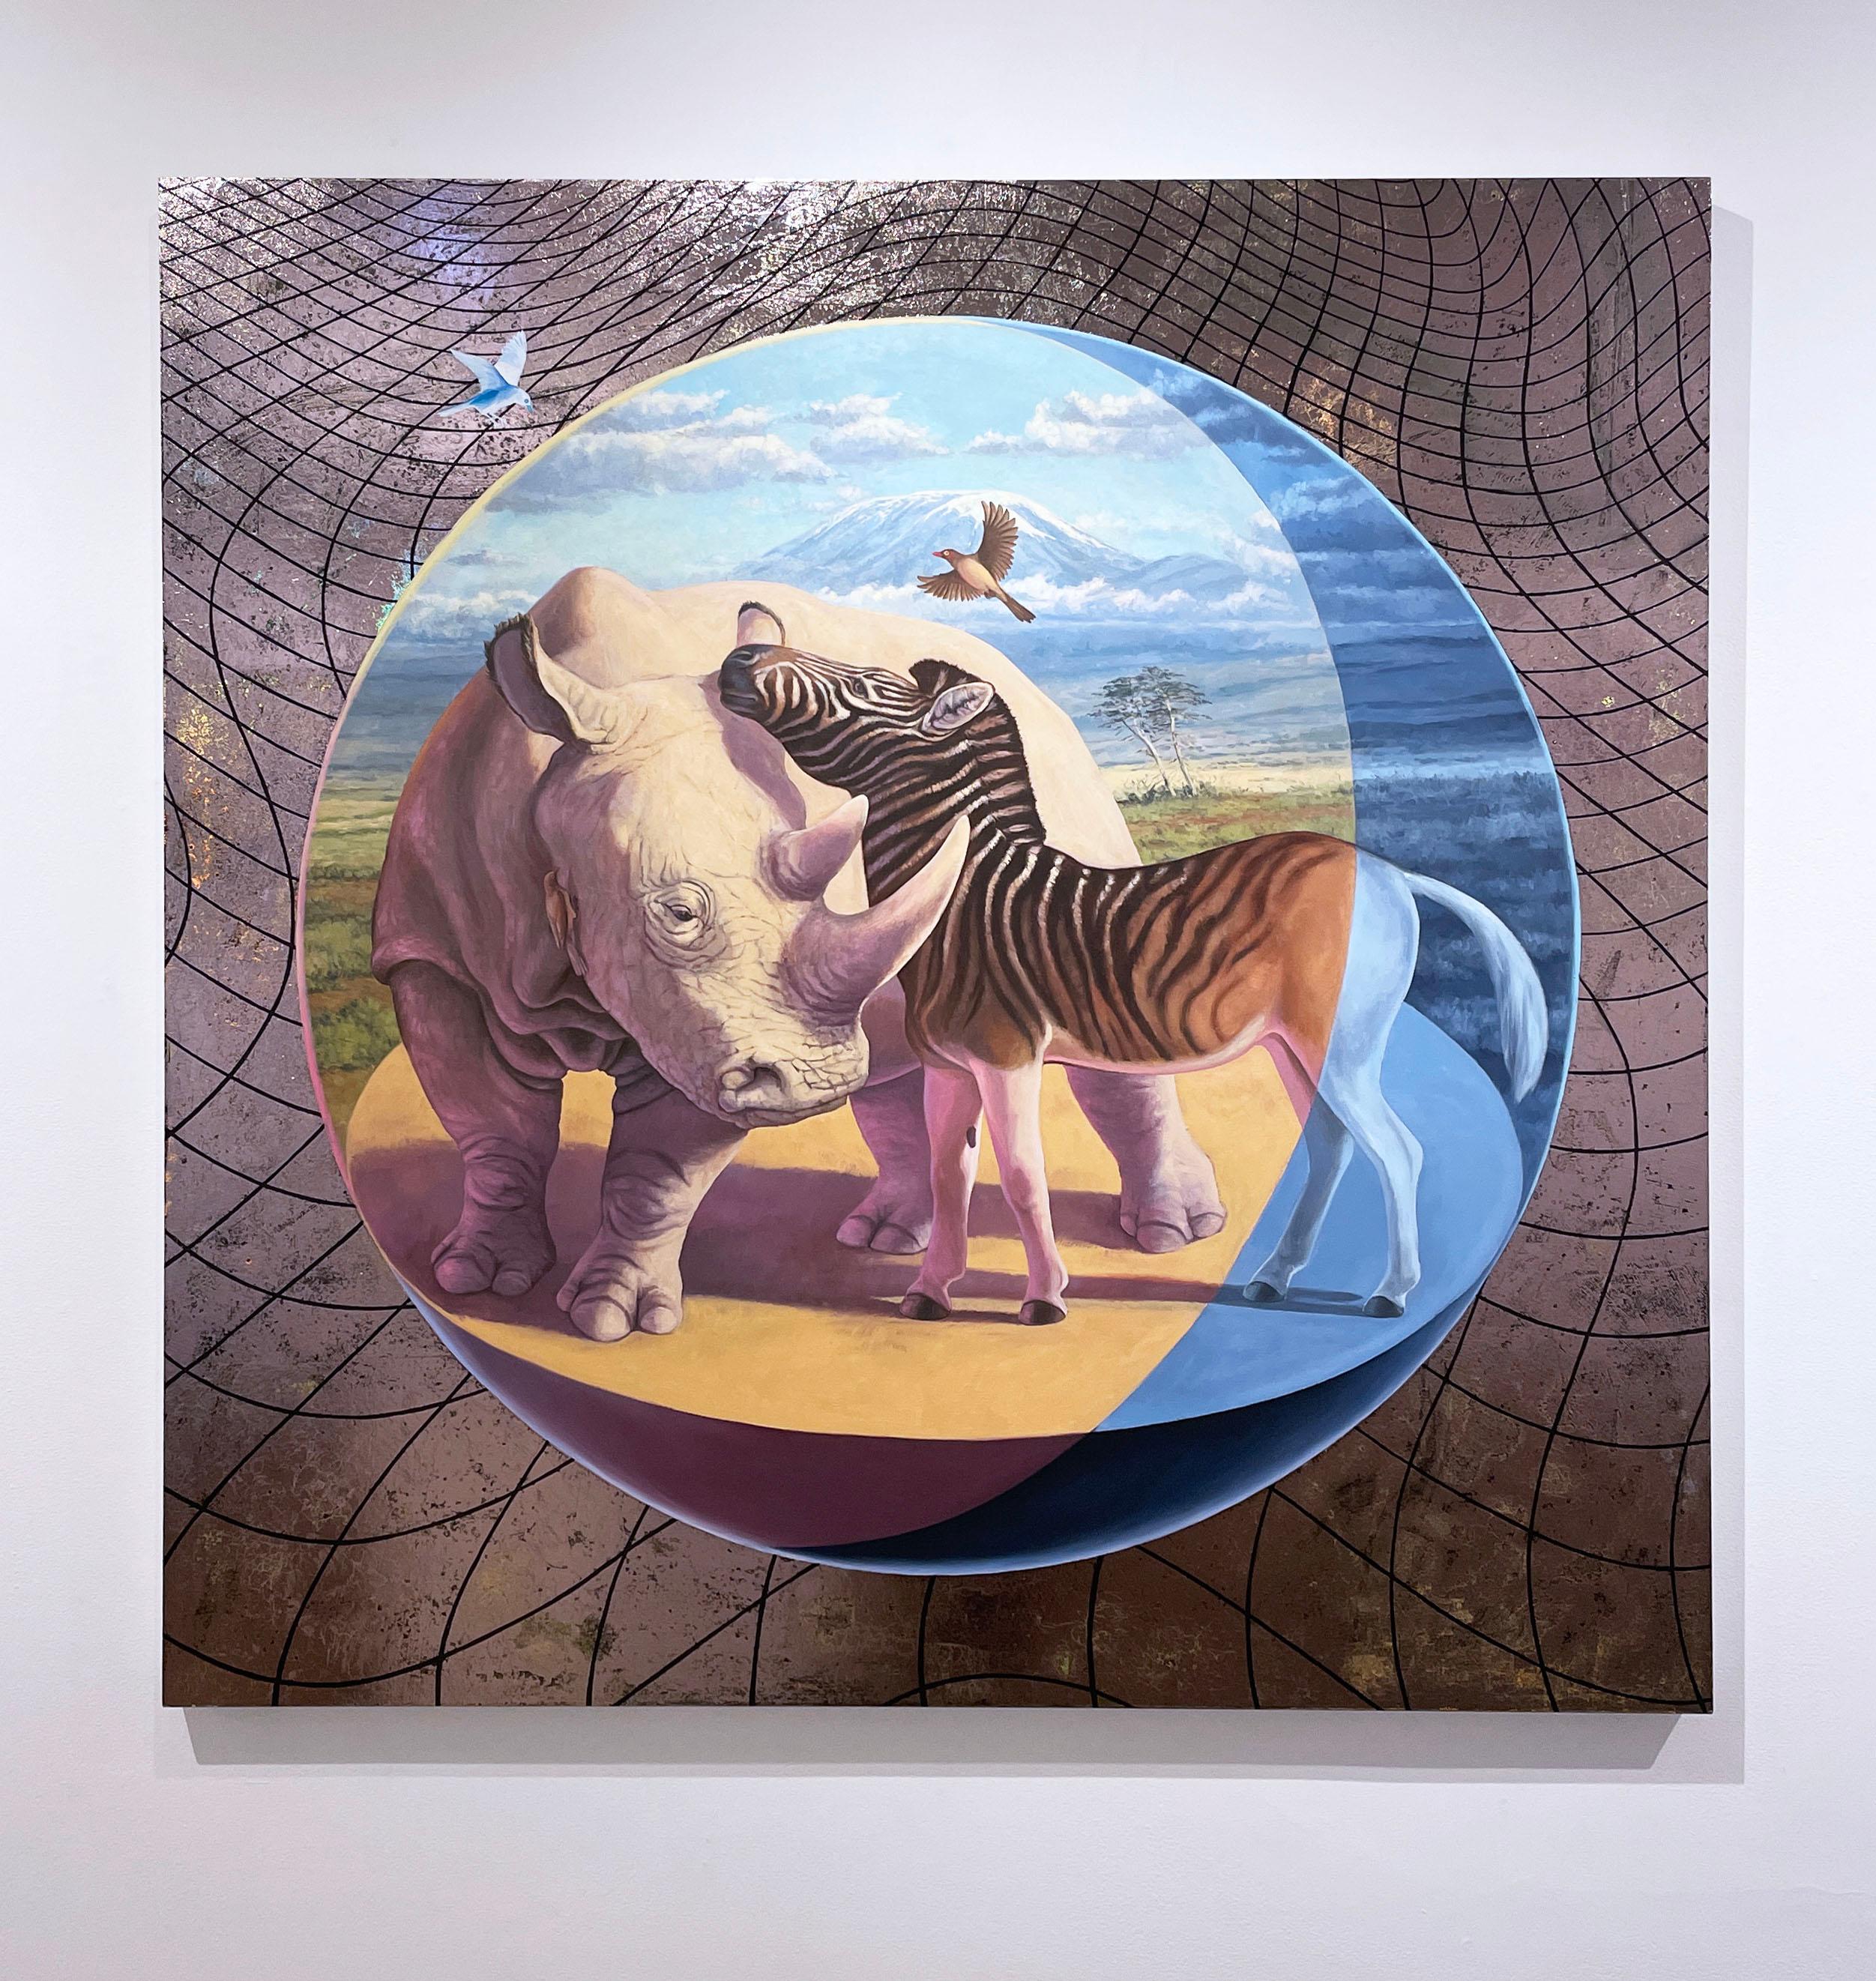 Quagga's Secret (2019) oil on panel, nature, wildlife landscape, Africa, rhino - Painting by Alexis Kandra